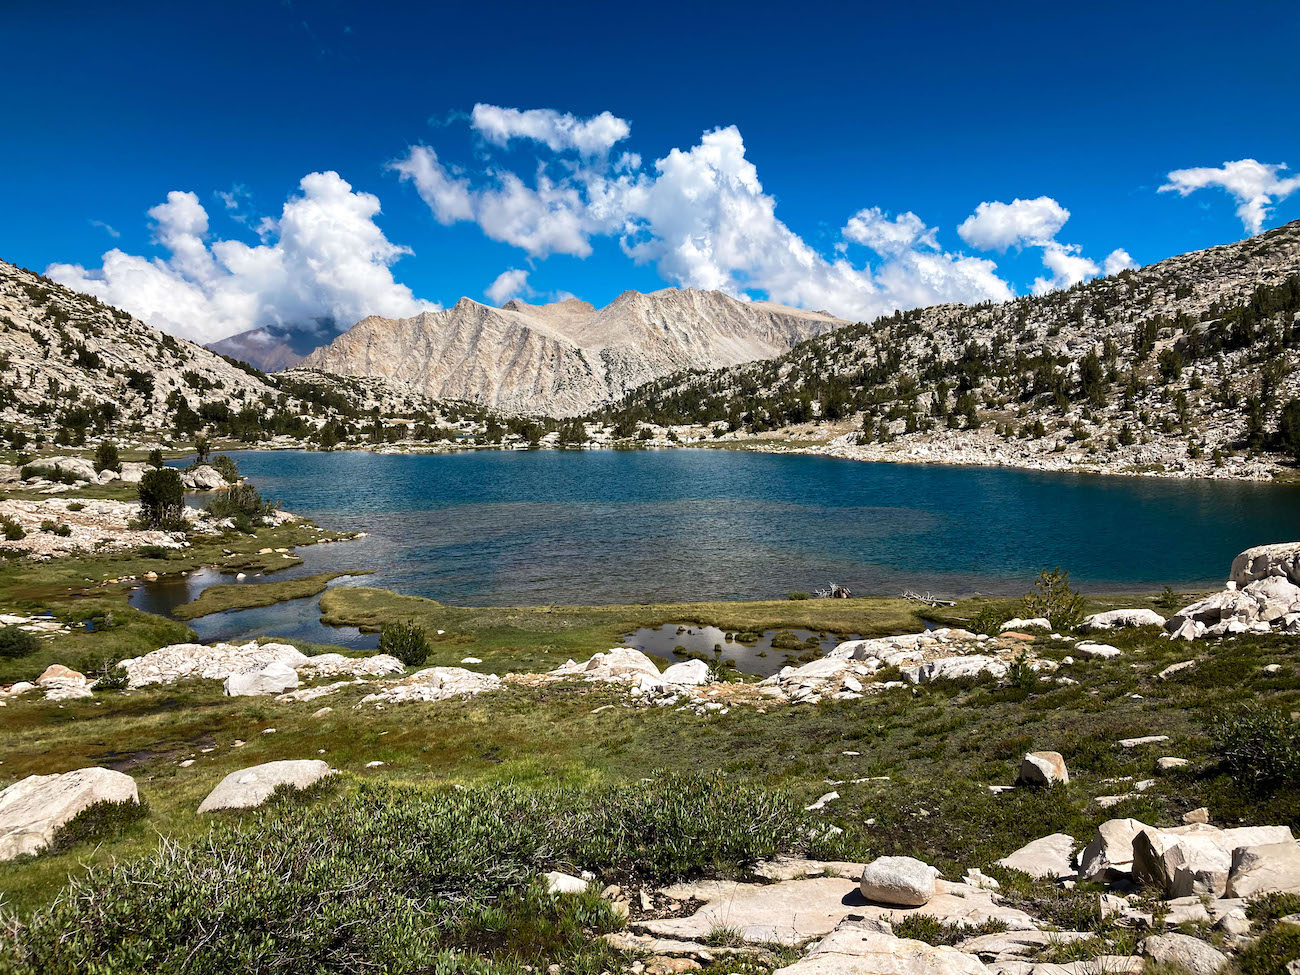 Chalfant Lakes in the Eastern Sierras